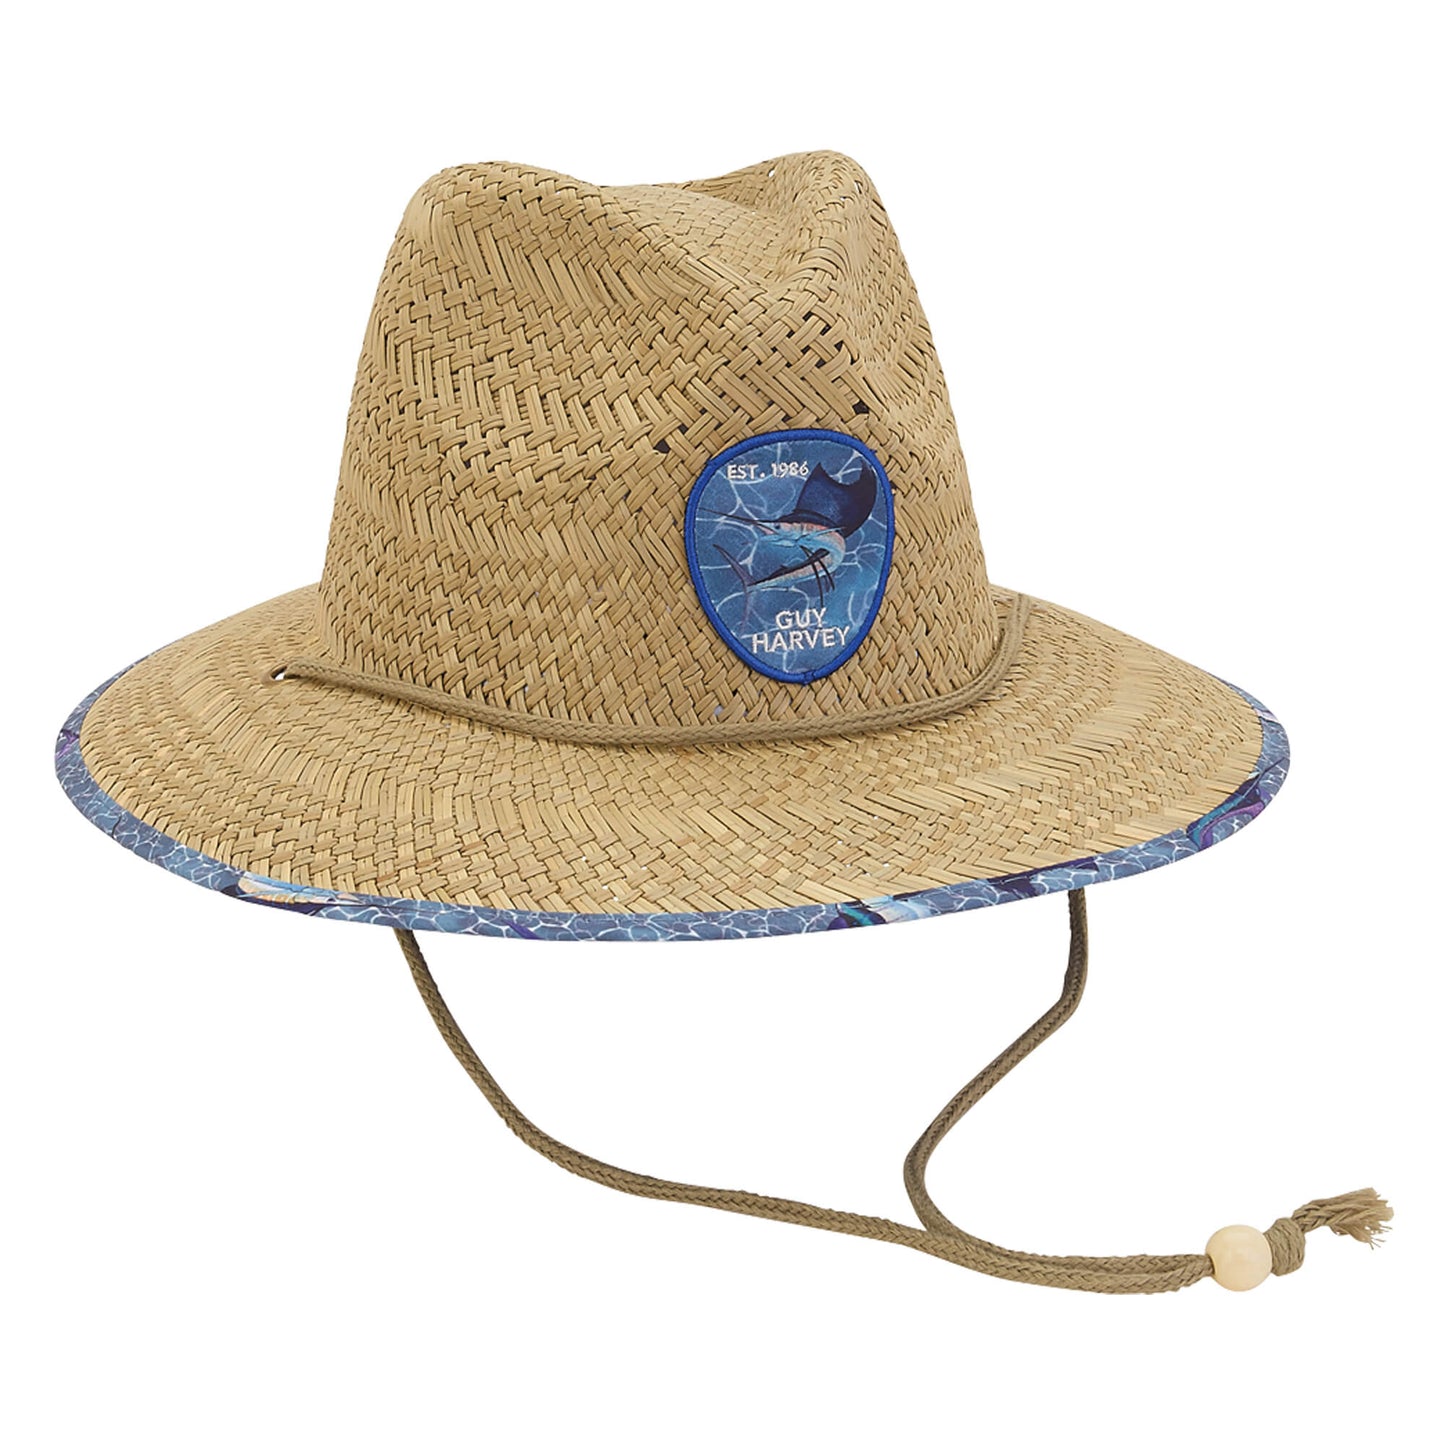 Jumping Sailfish Straw Hat